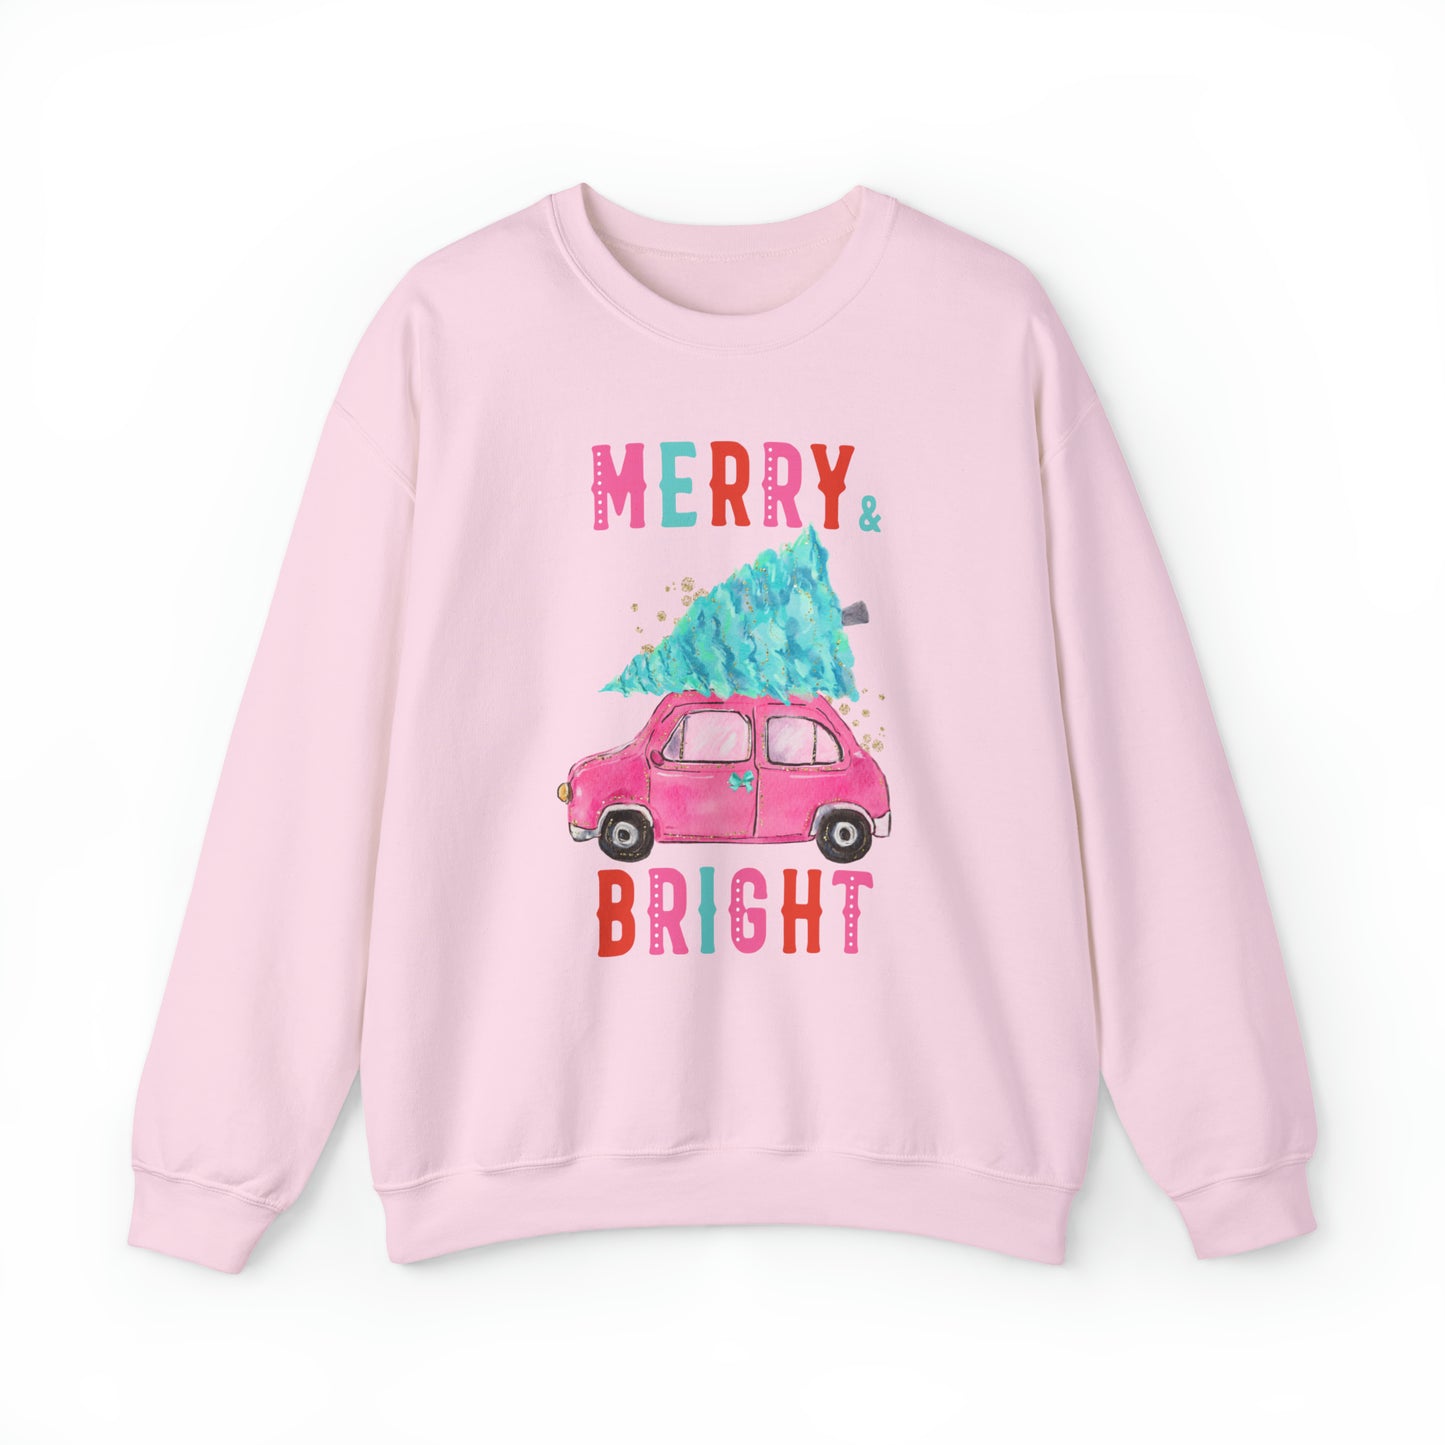 Merry & Bright - Crewneck